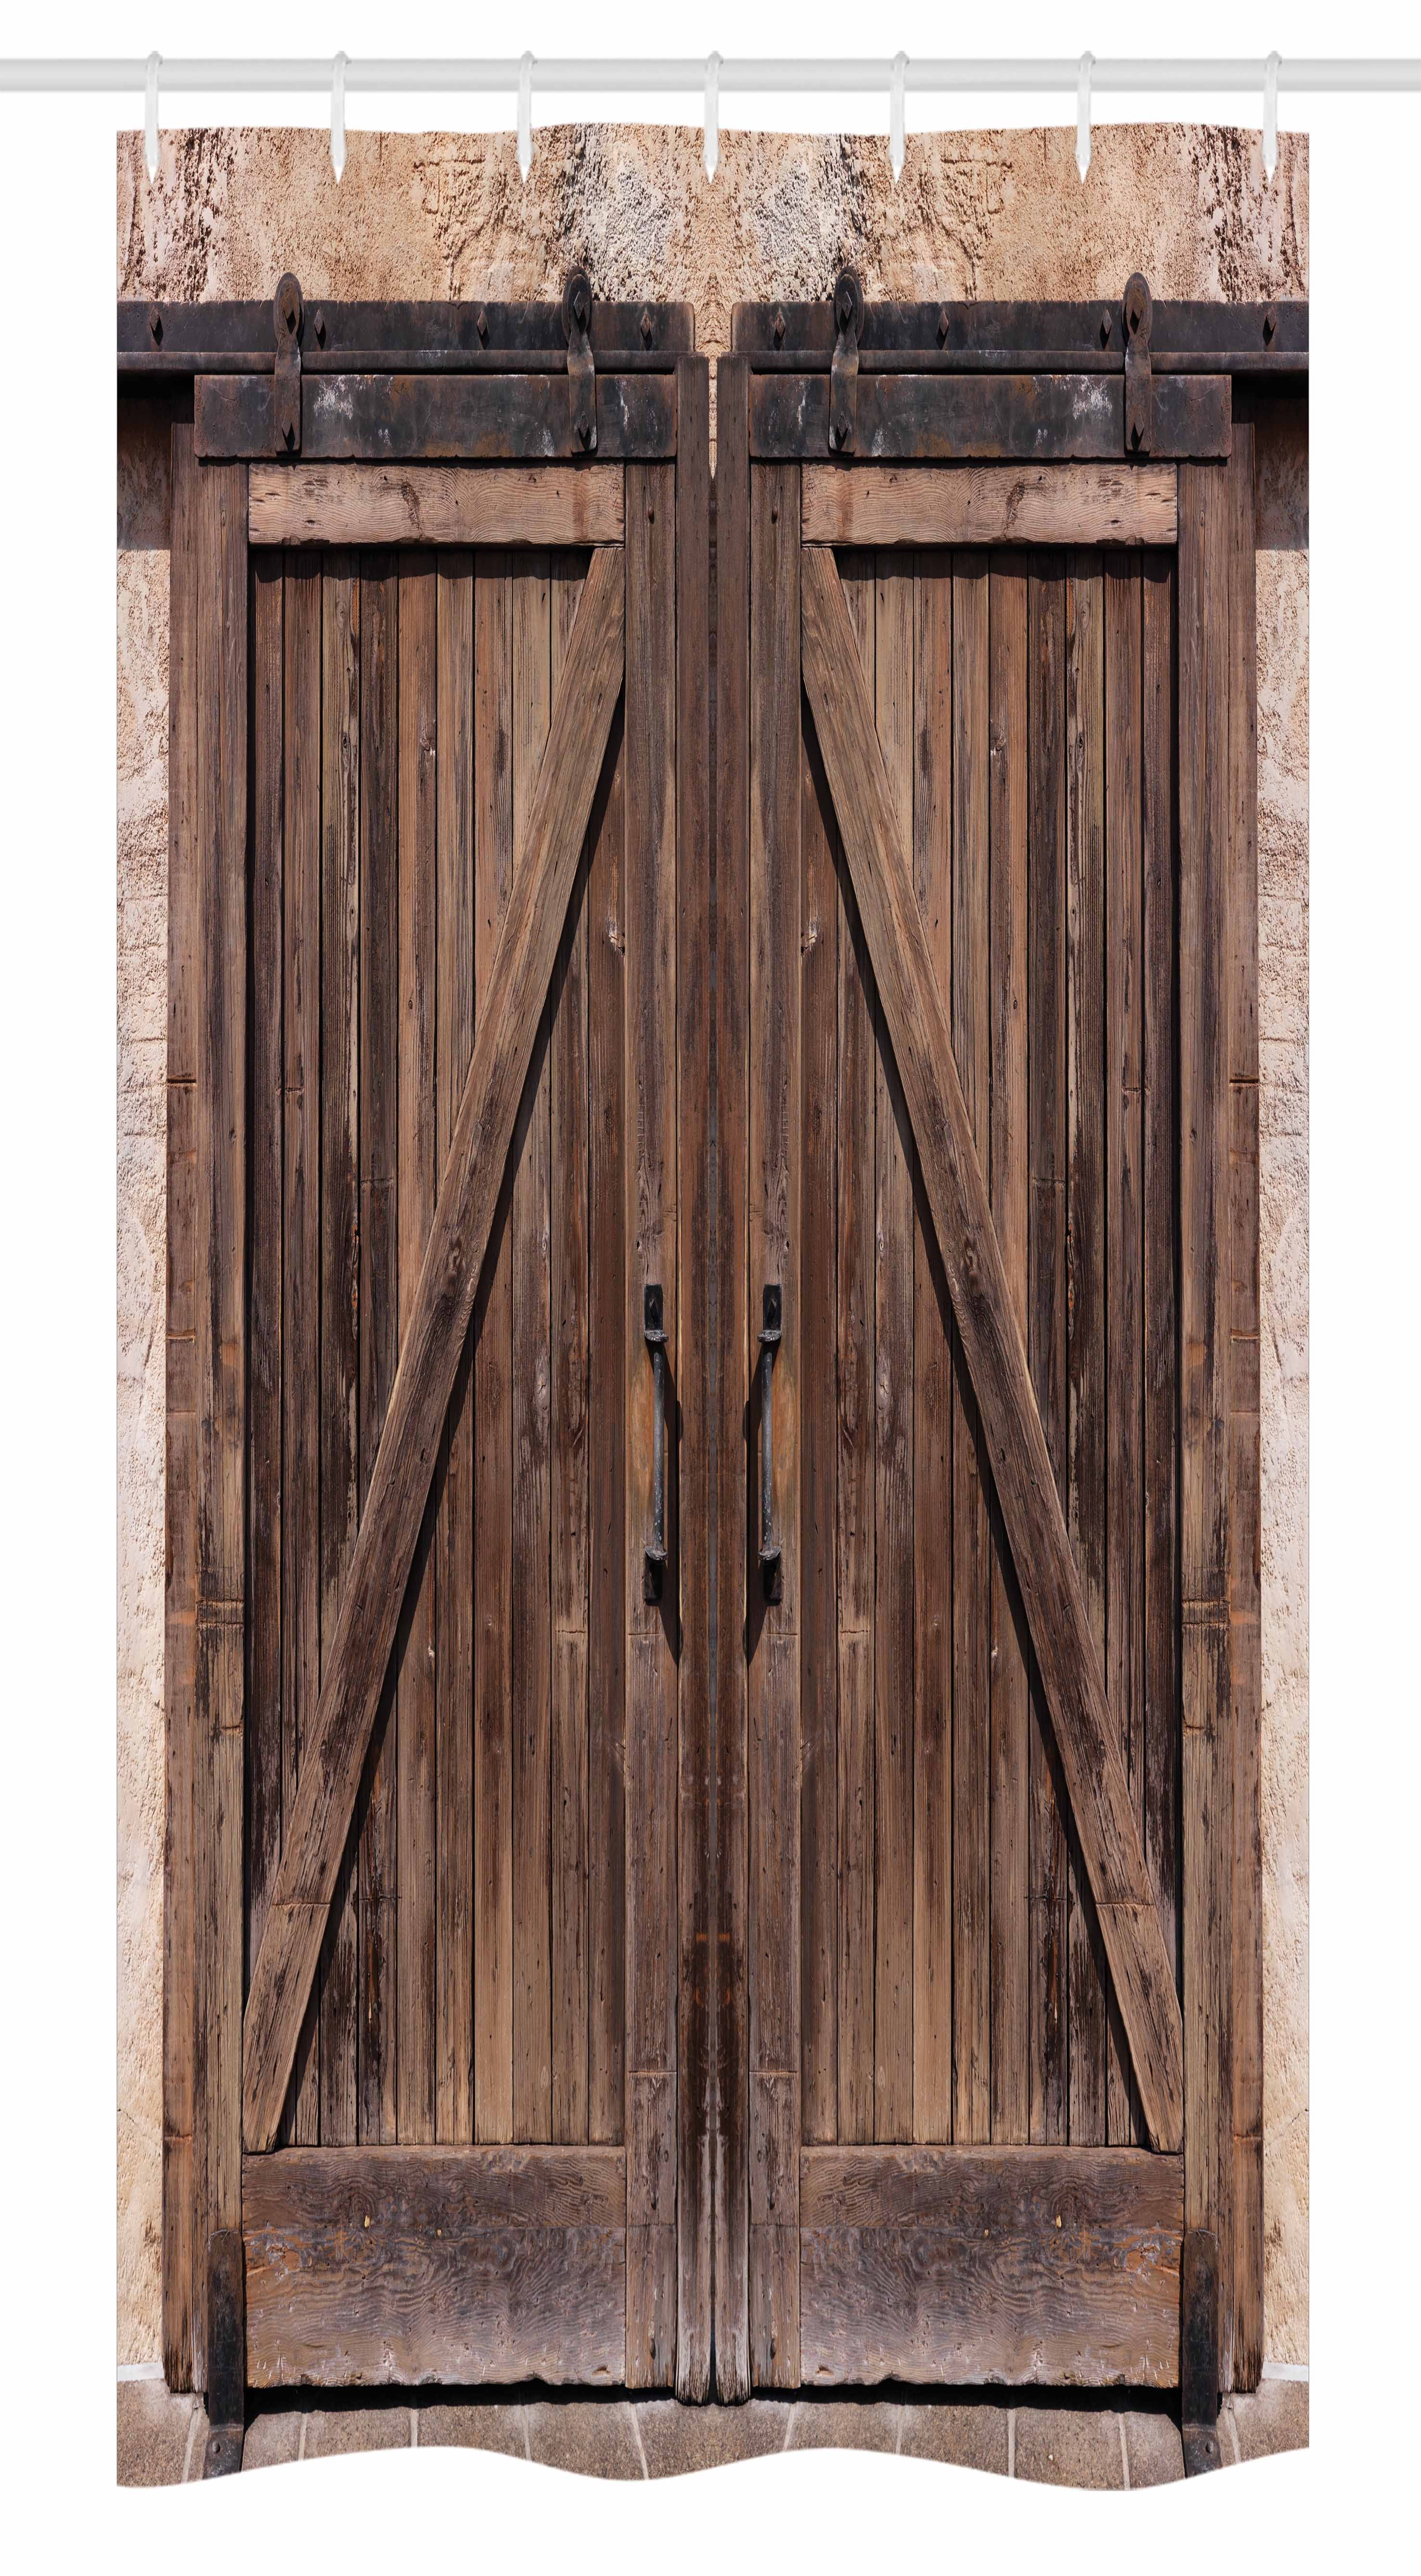 Rustic Wooden Board Barn Door Waterproof Shower Curtain Bath Rug Set & 12 Hooks 